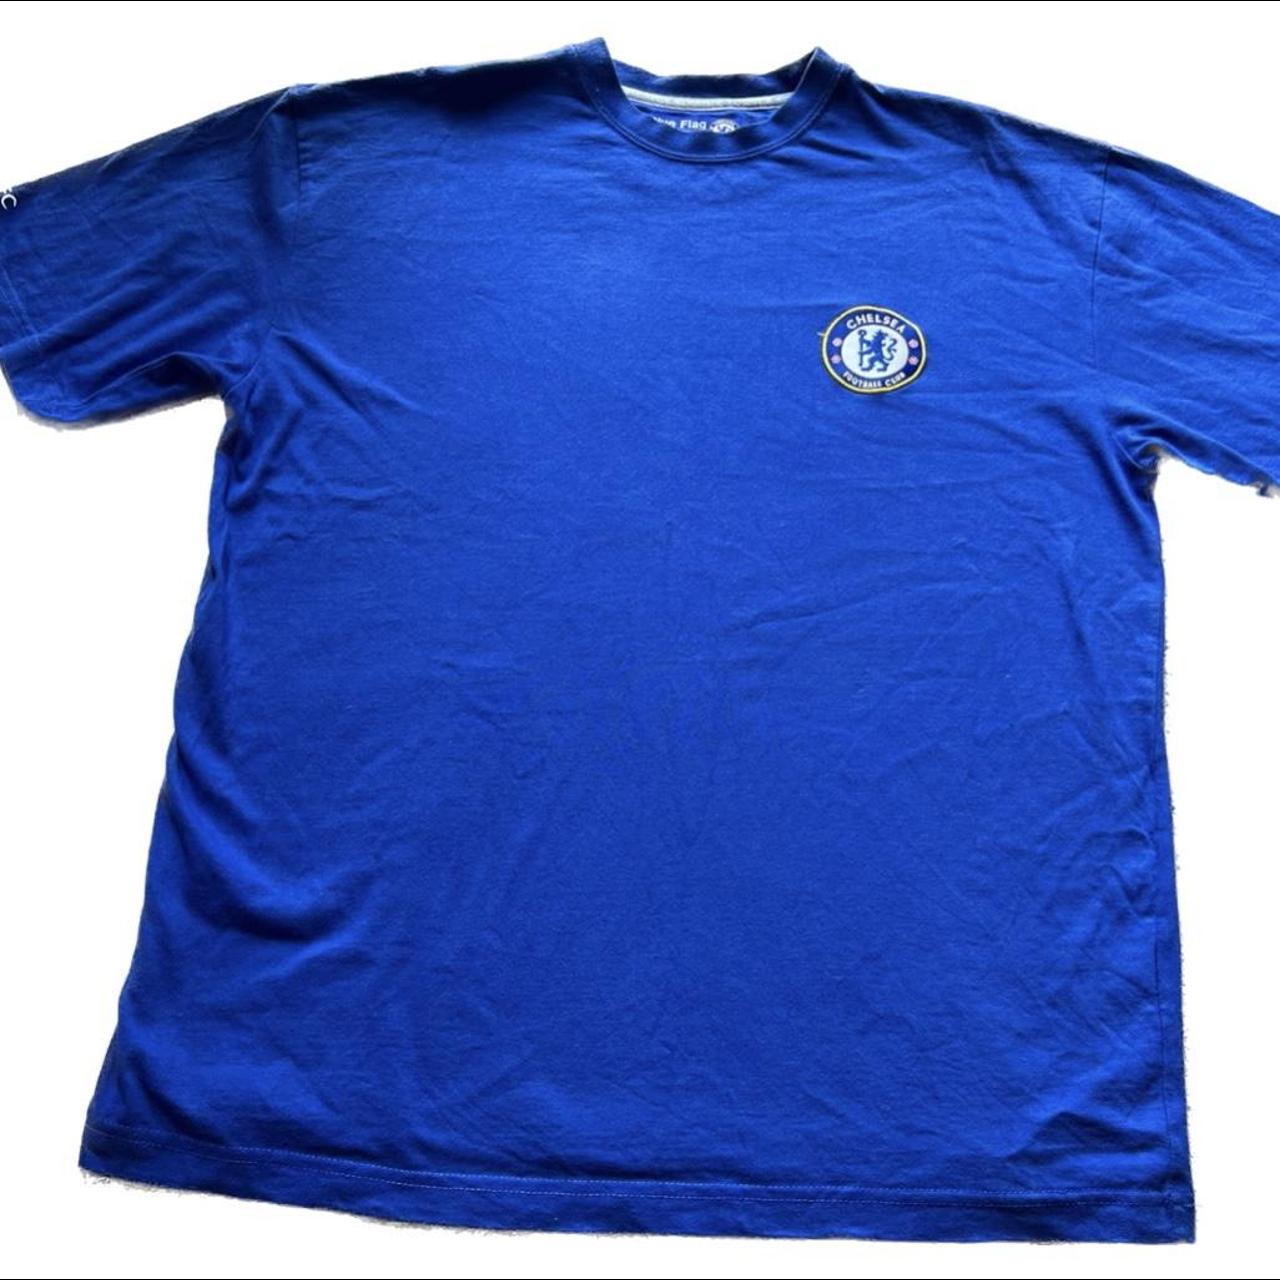 JC Newman - Connoisseurs Club - t-shirt (M, Lg, XL, XXLyou choose)